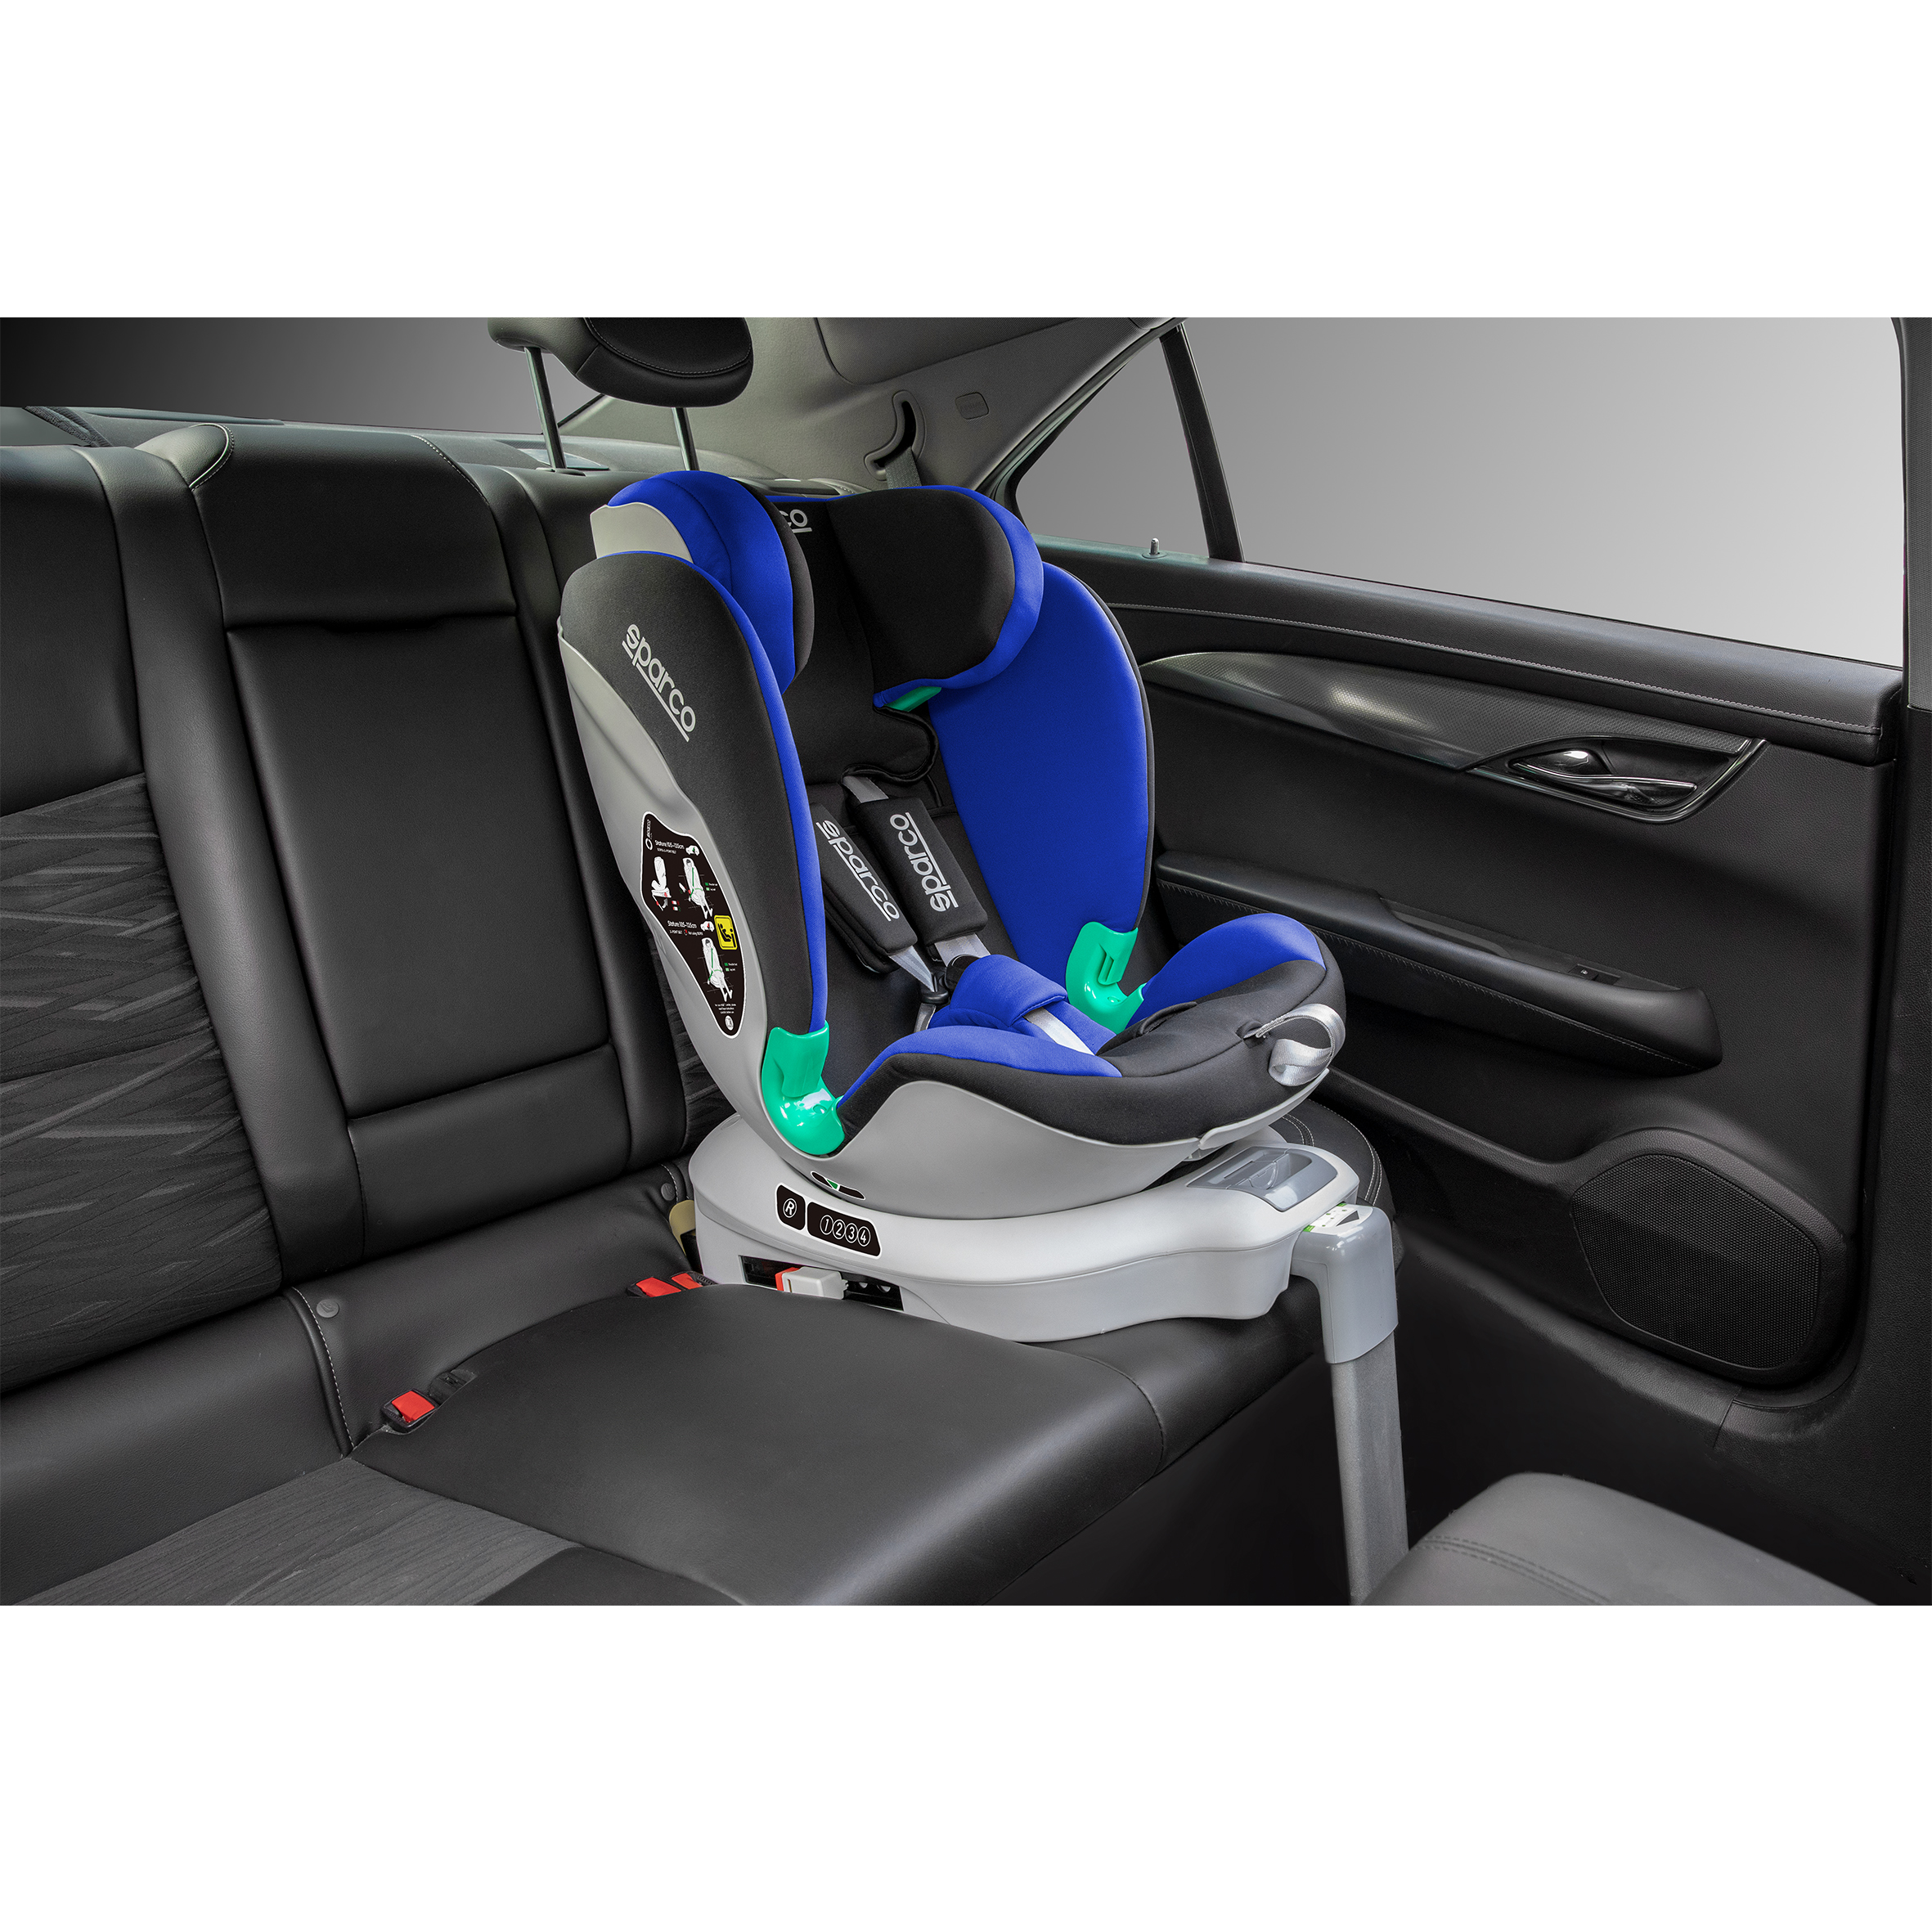 Seat Belt Pads – Sparco Corsa